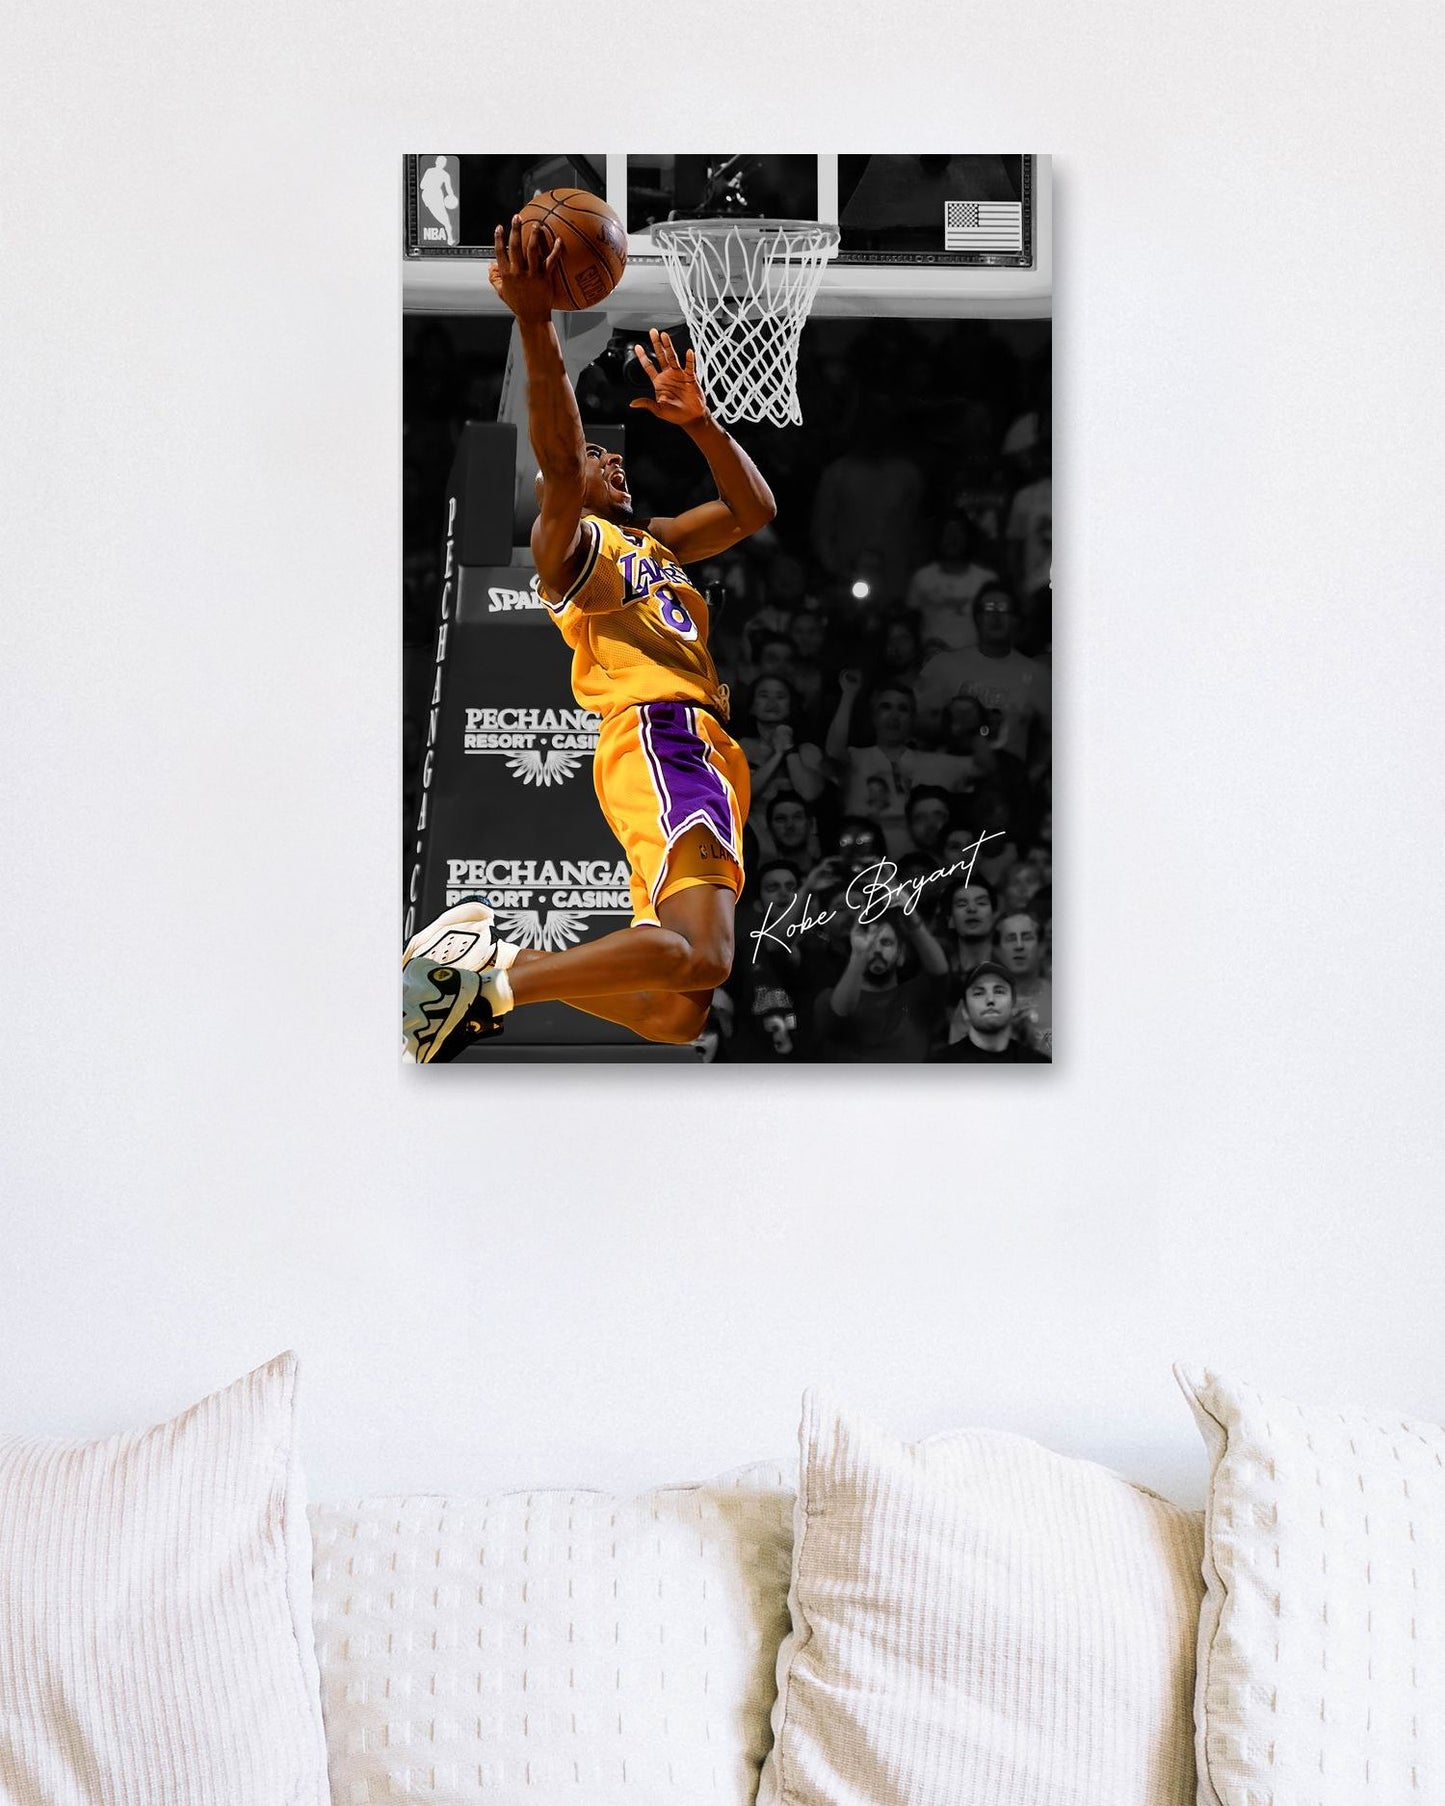 Kobe Bryant 7 - @MiracleCreative